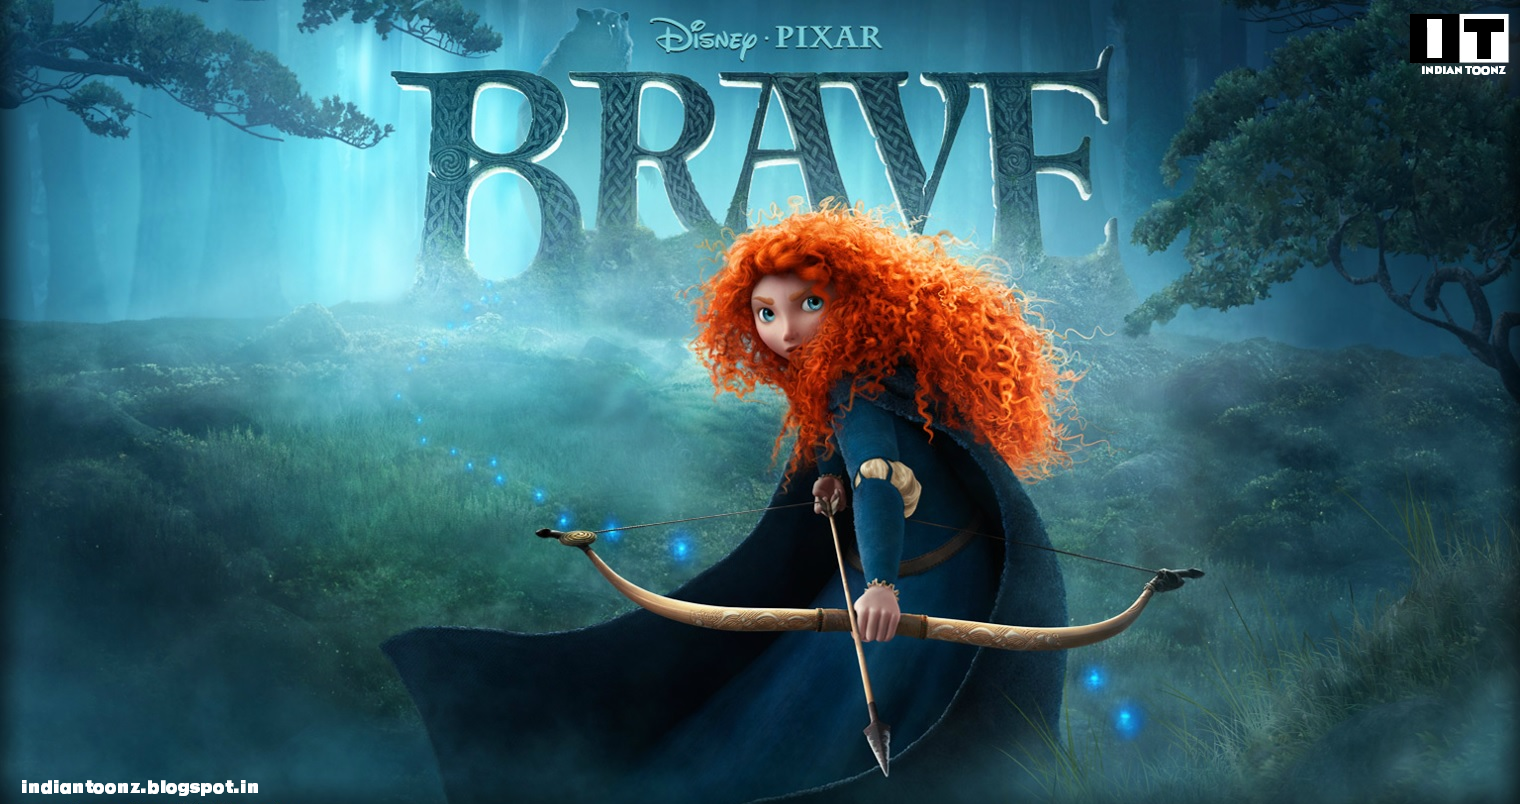  Indian  Toonz Disney Pixar s Brave  HINDI  Full  Movie  Full  